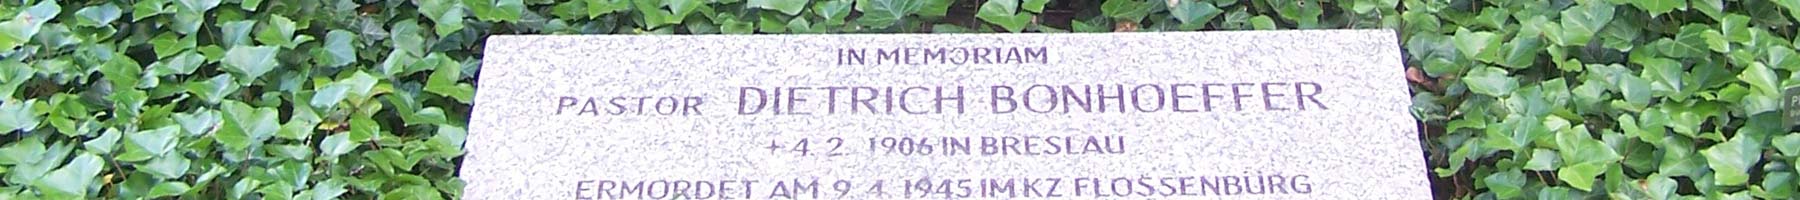  A photograph of Bonhoeffer's gravestone.